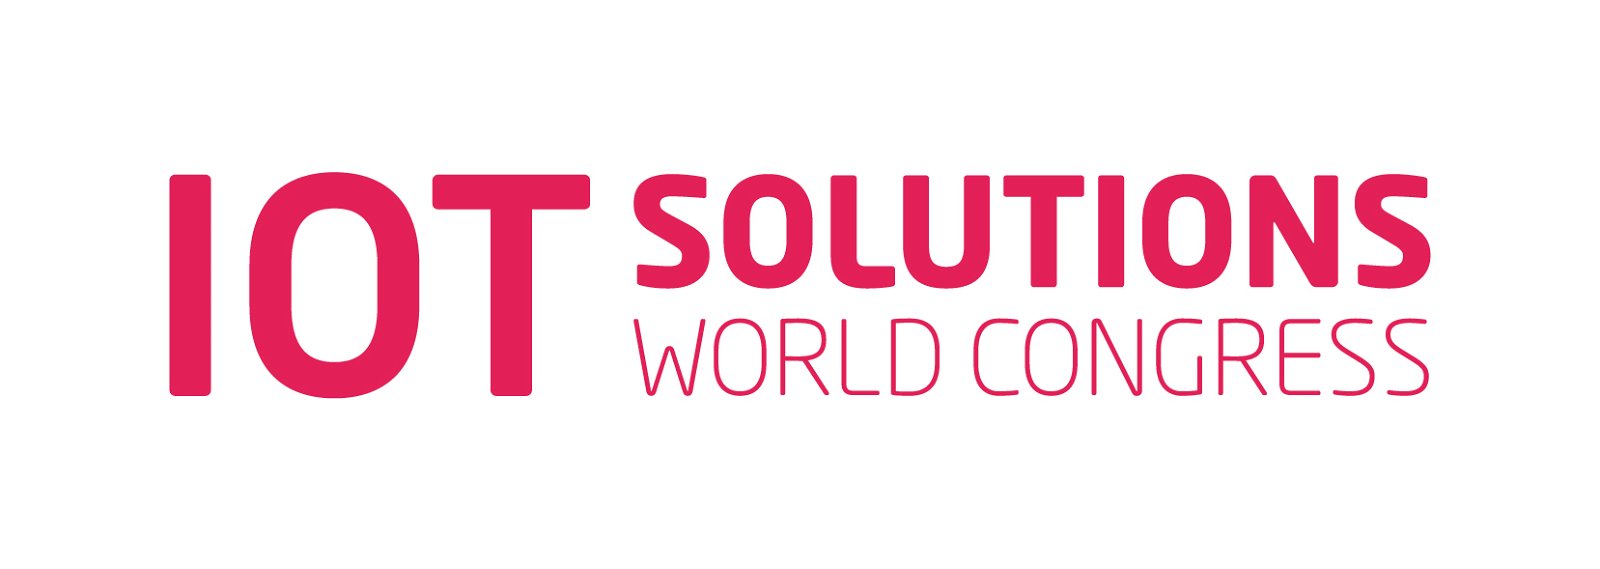 iot solution world congress